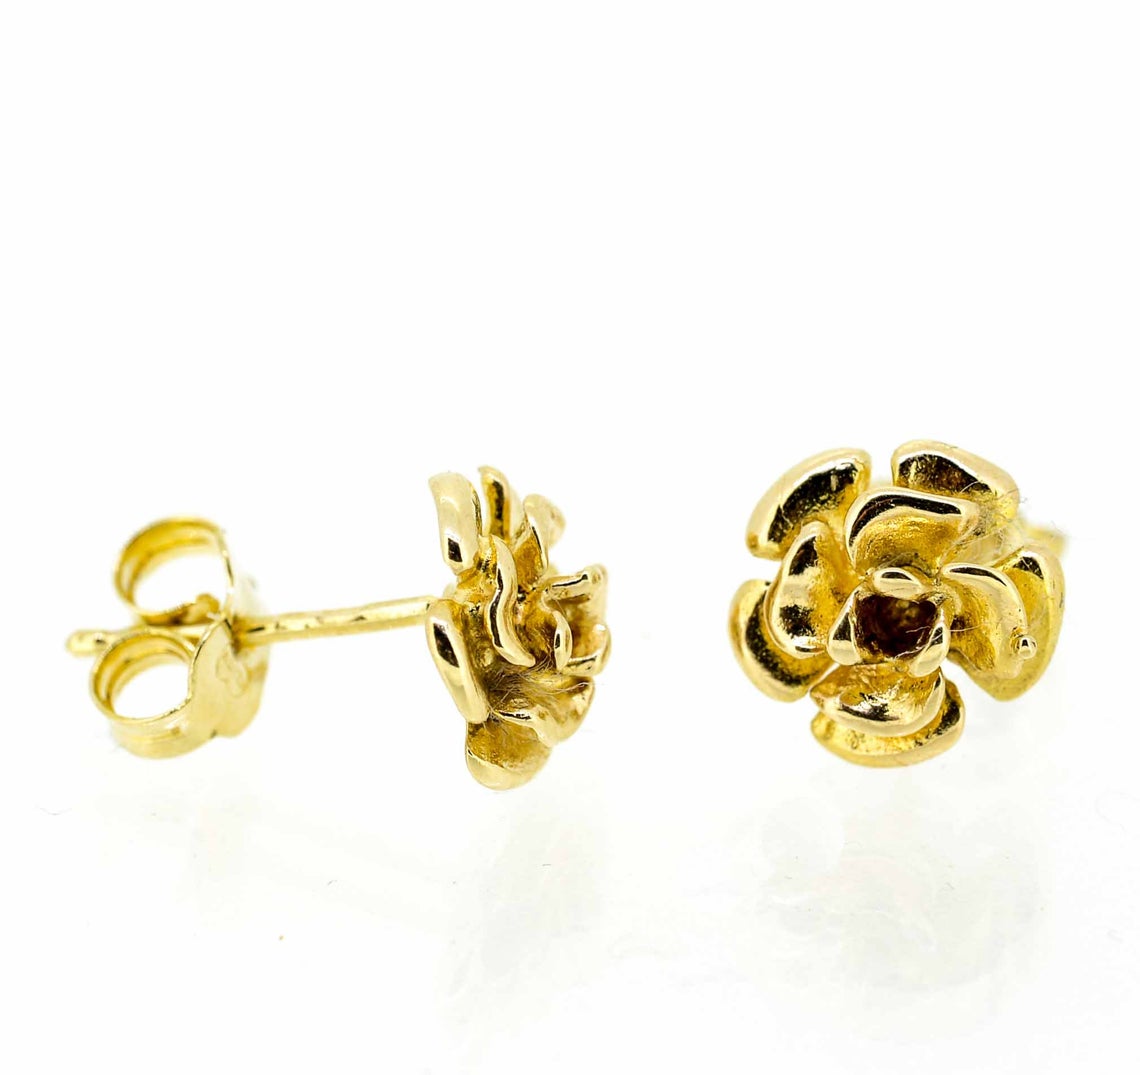 Vintage 9ct Yellow Gold Flower Rose Stud Earrings